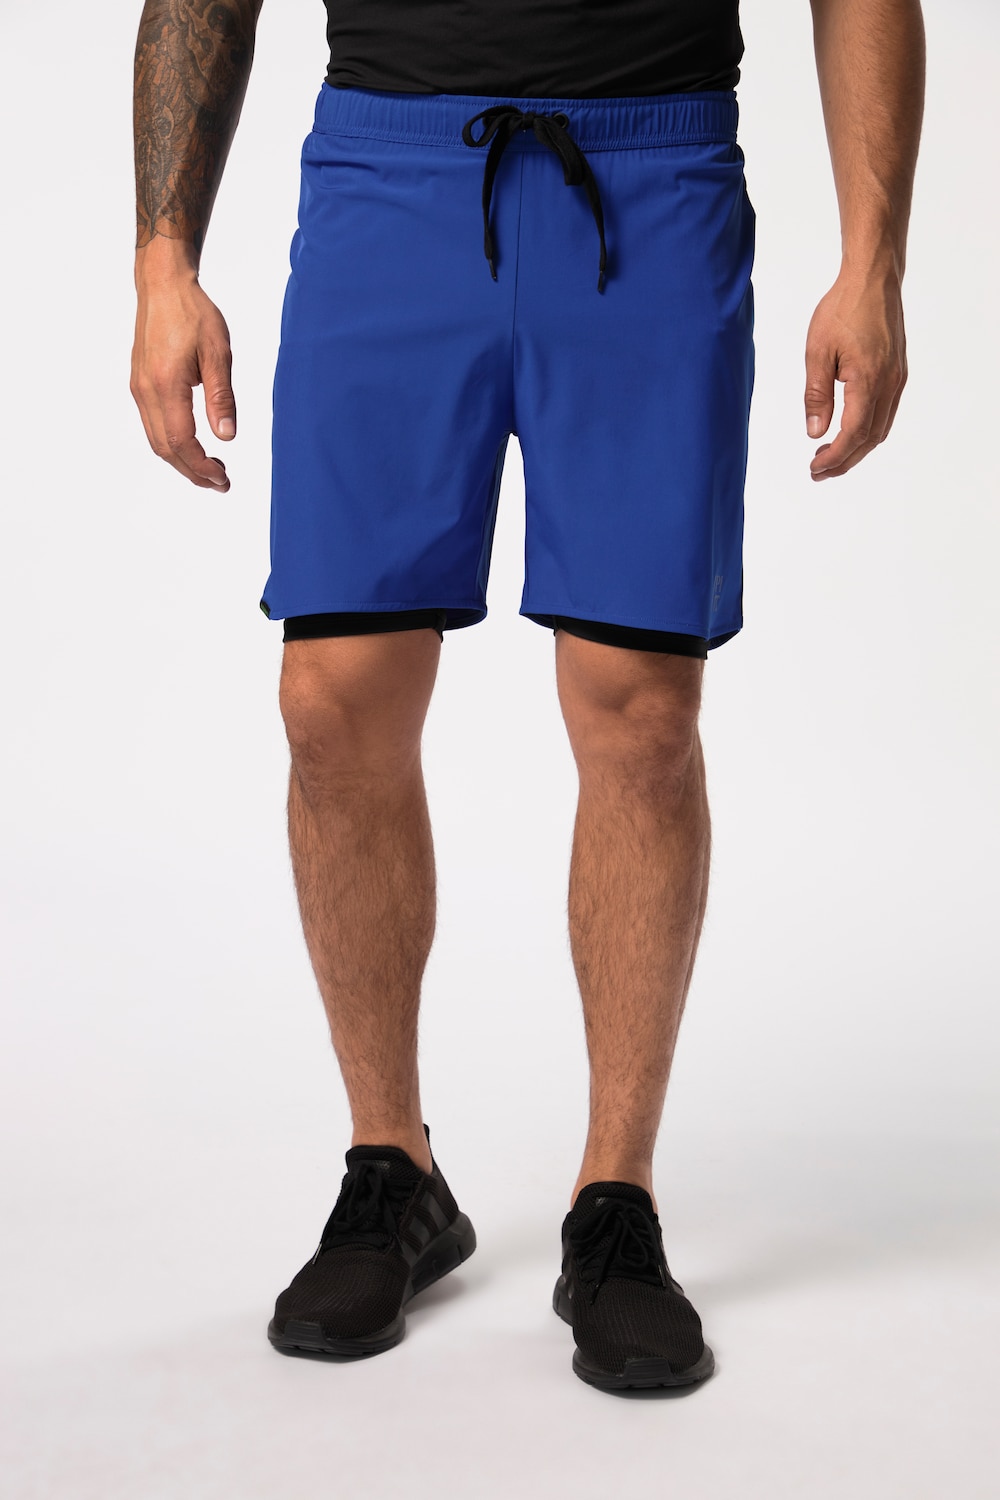 grandes tailles pantalon de sport jay-pi flexnamic®, femmes, bleu, taille: 5xl, polyester/fibres synthétiques/élasthanne, jay-pi